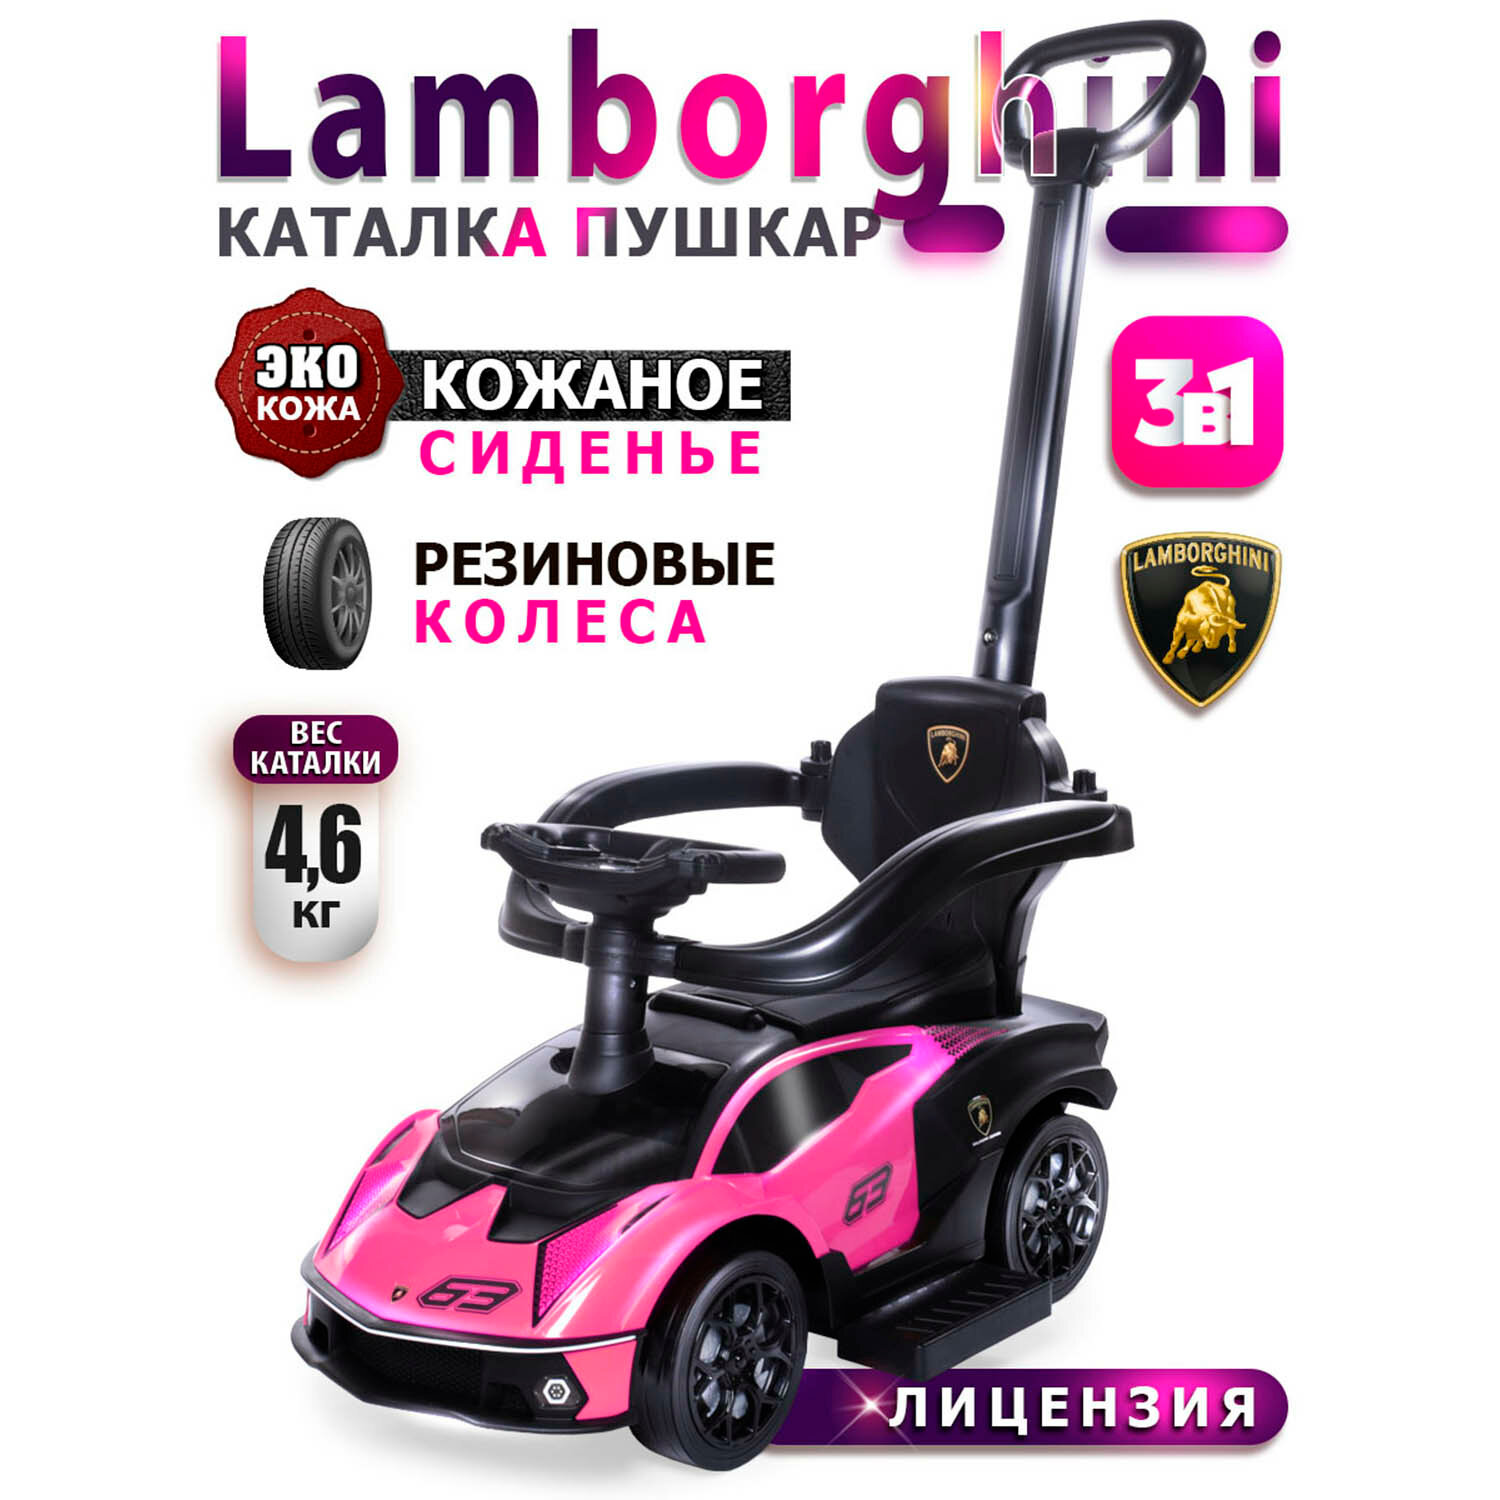  Babycare Lamborghini 661 